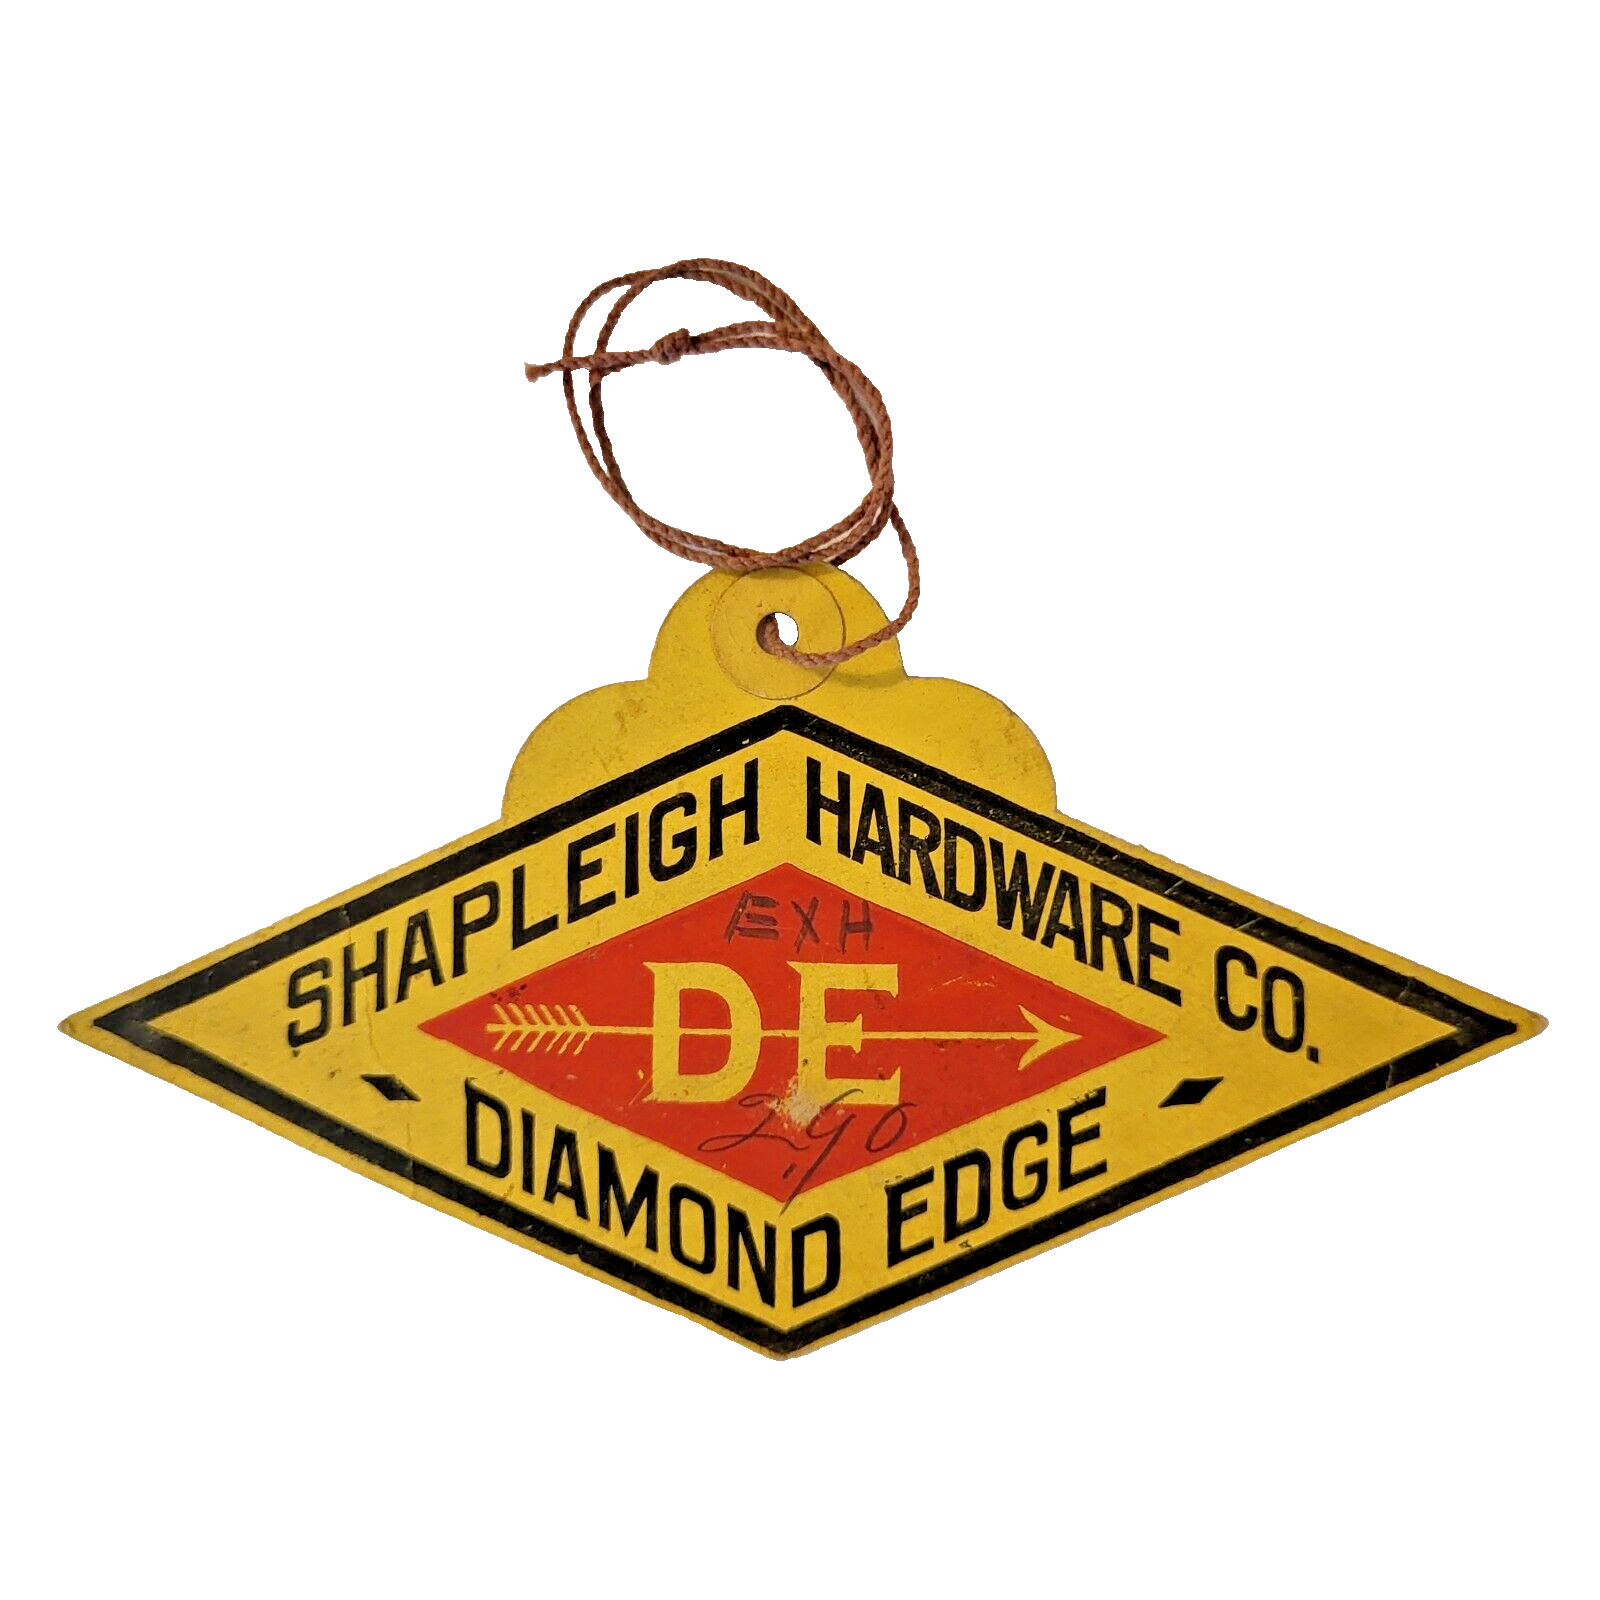 VTG Antique SHAPLEIGH HARDWARE Co Diamond Edge Hand Saw Tool Hang Tag Label Rare